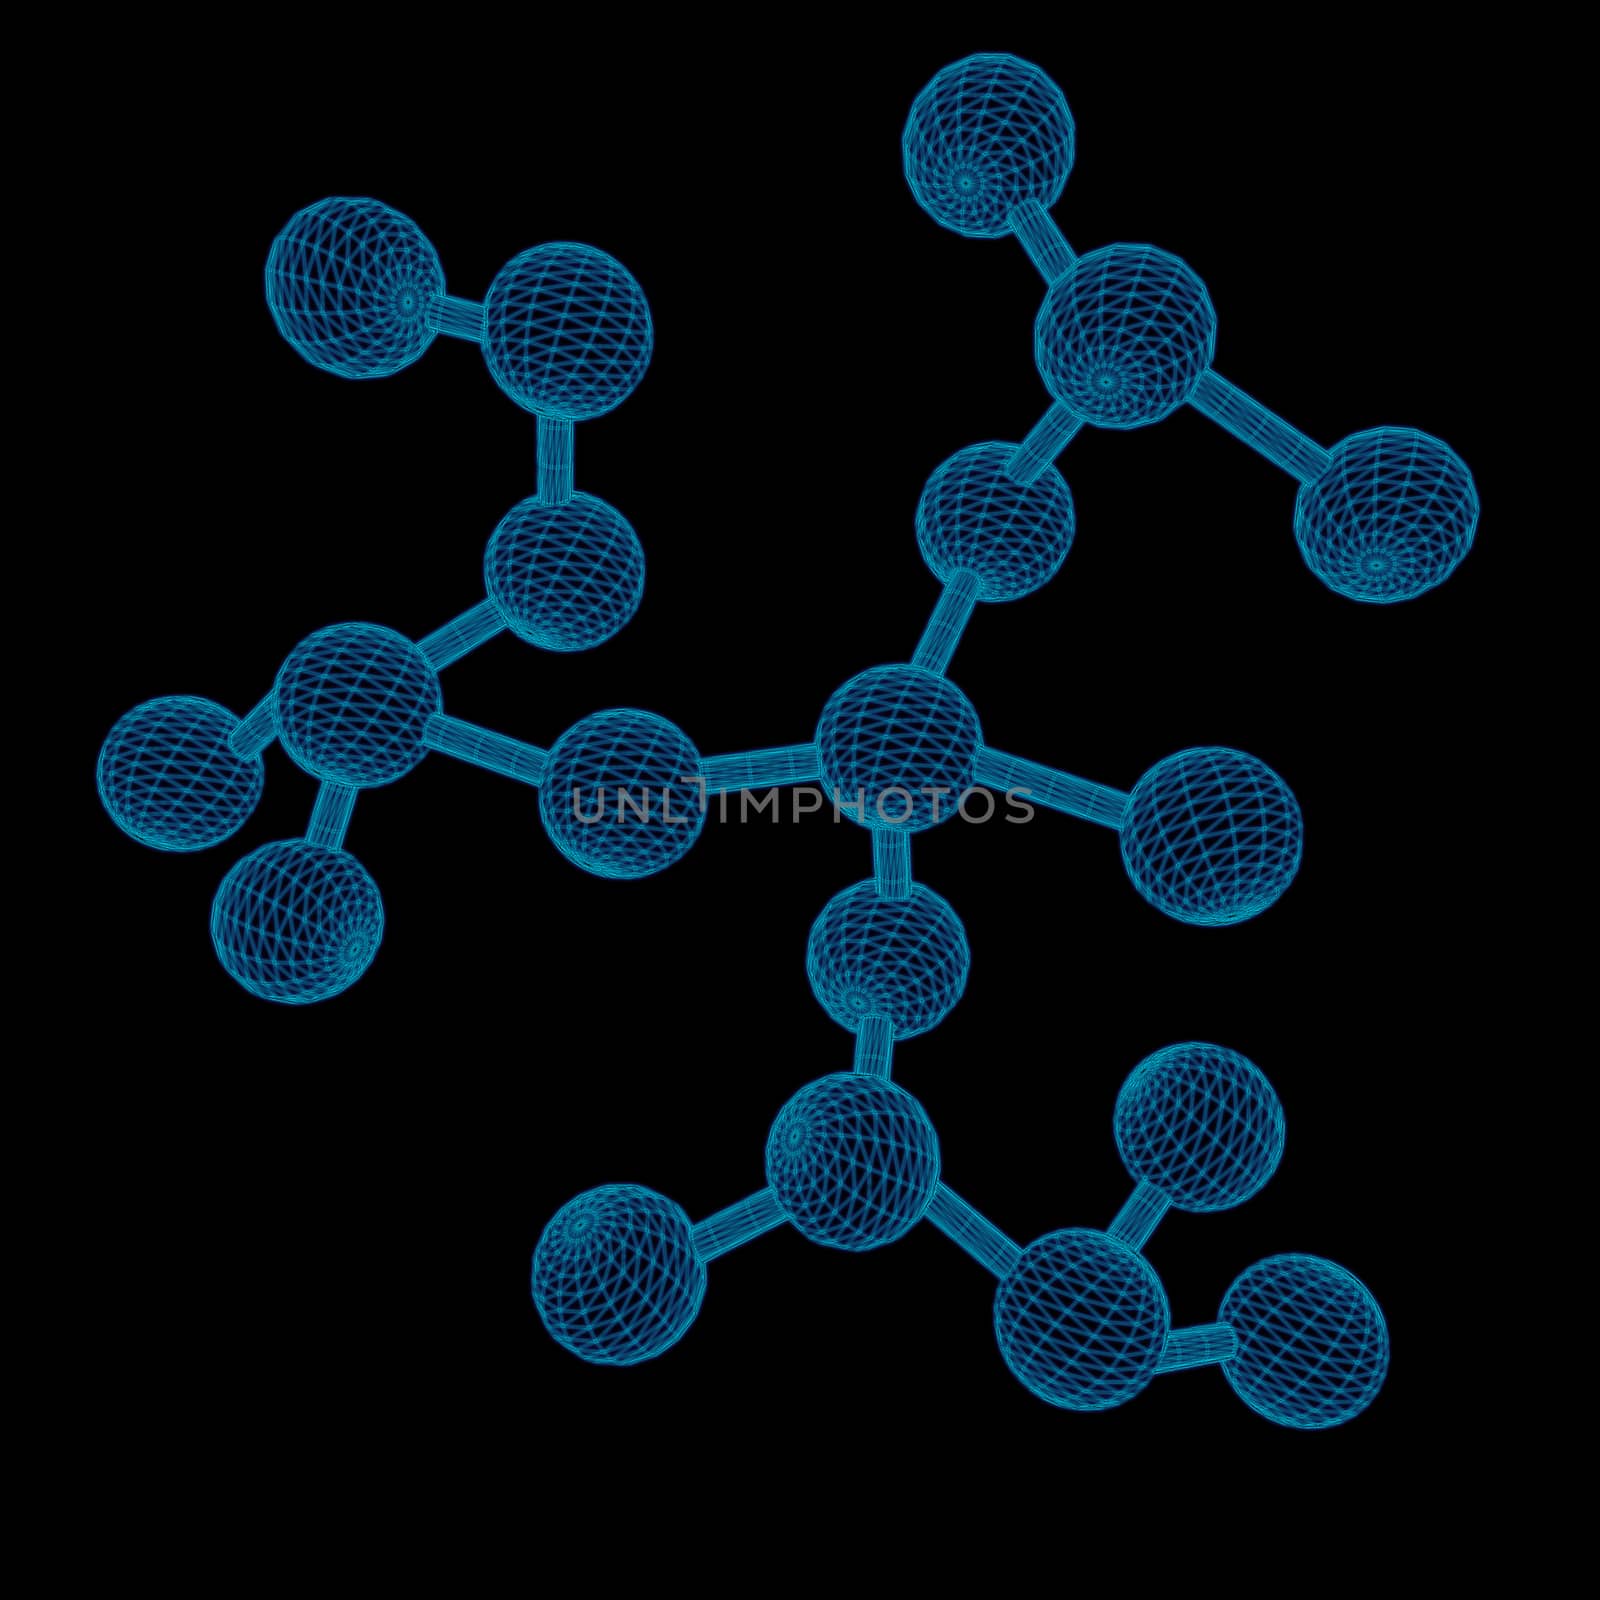 Molecule or Molecules Basic Structure on Black